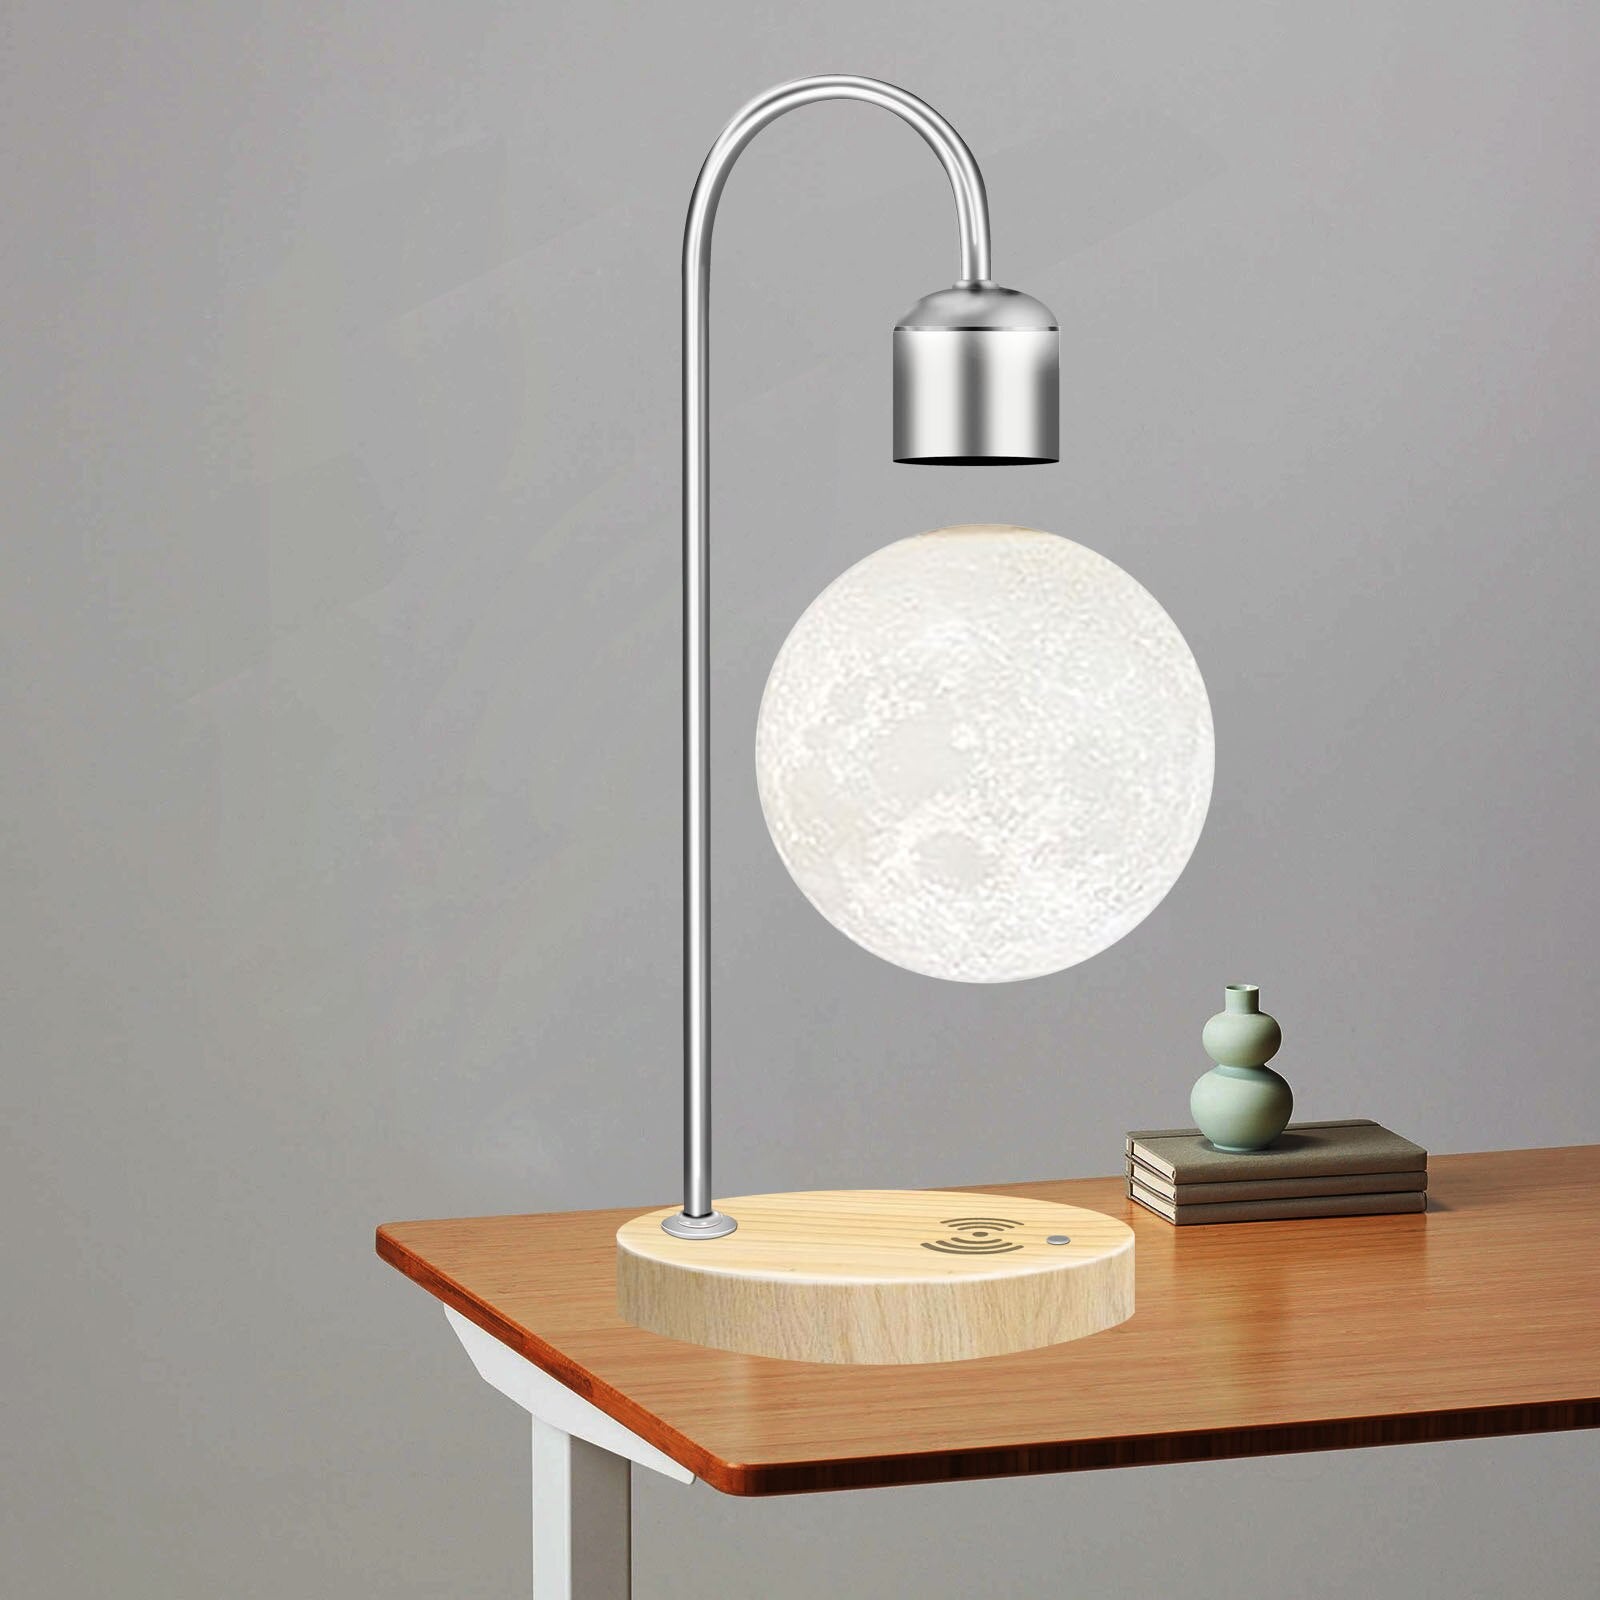 Levitating Moon Speaker Lamp